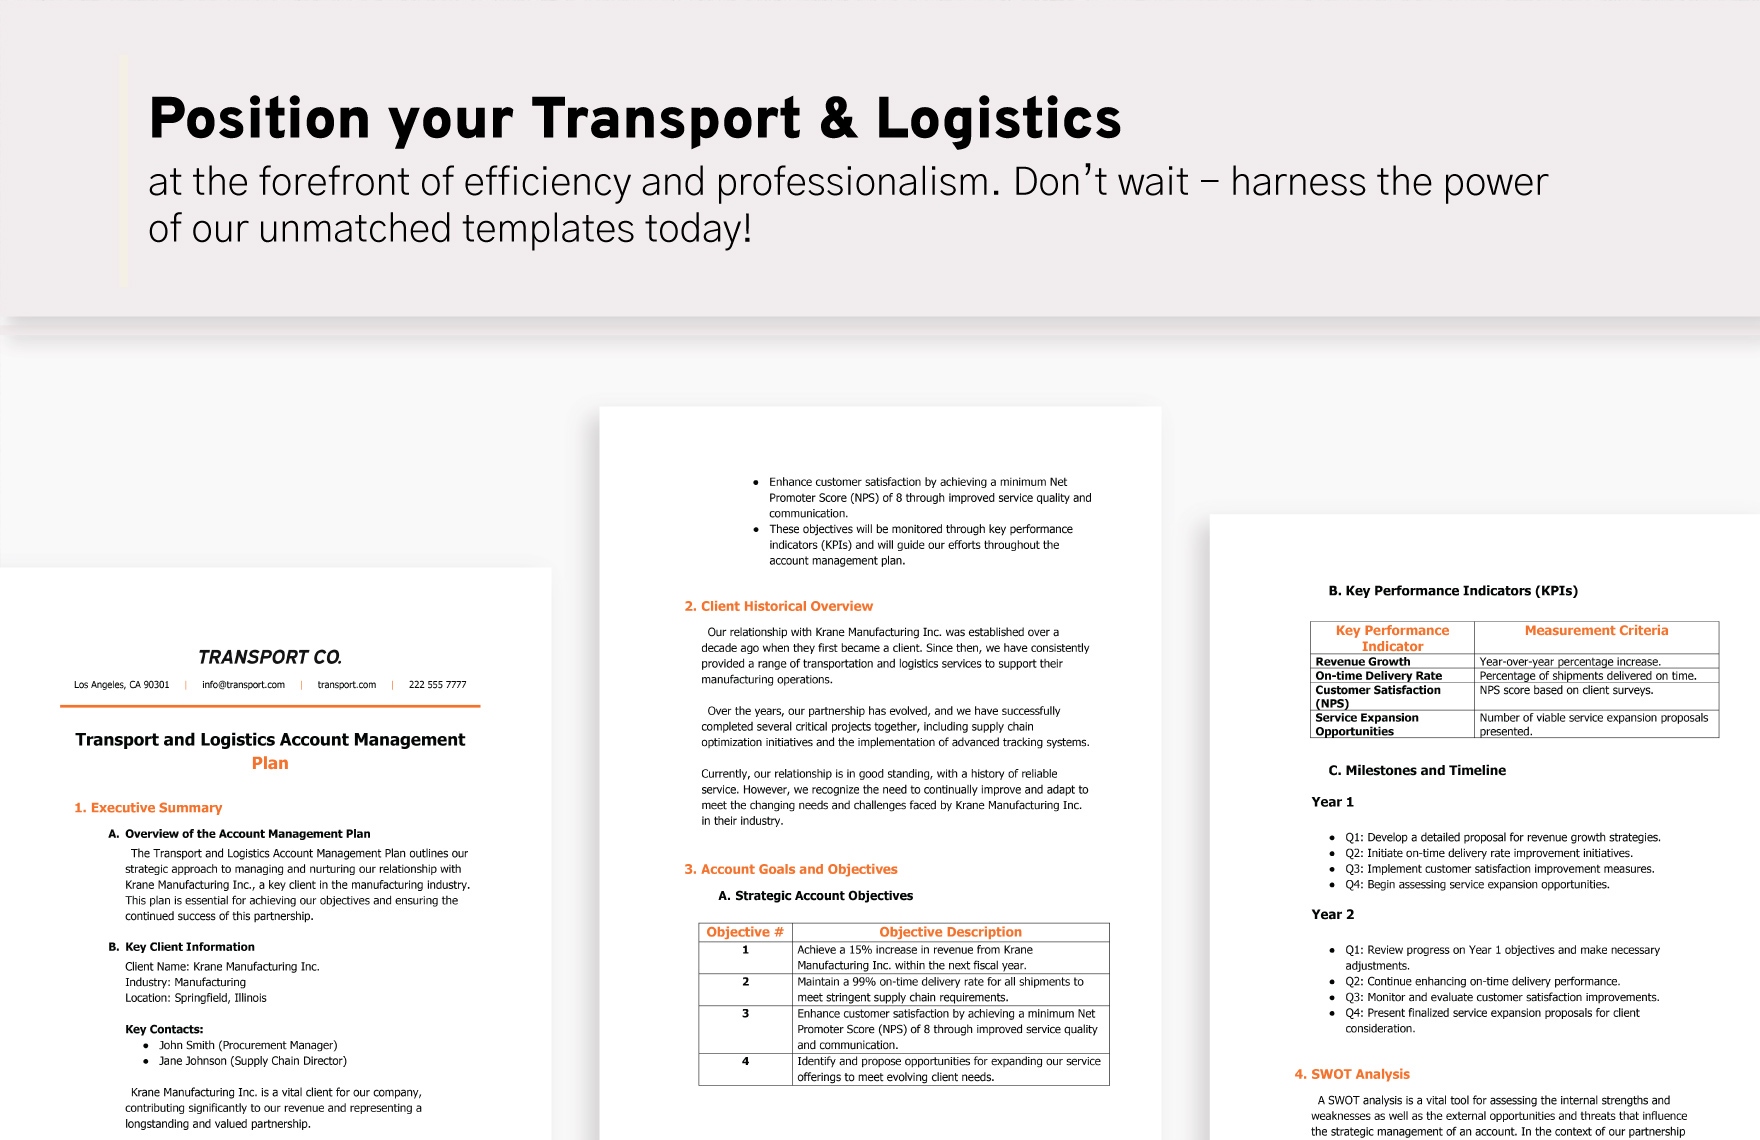 Transport and Logistics Account Management Plan Template